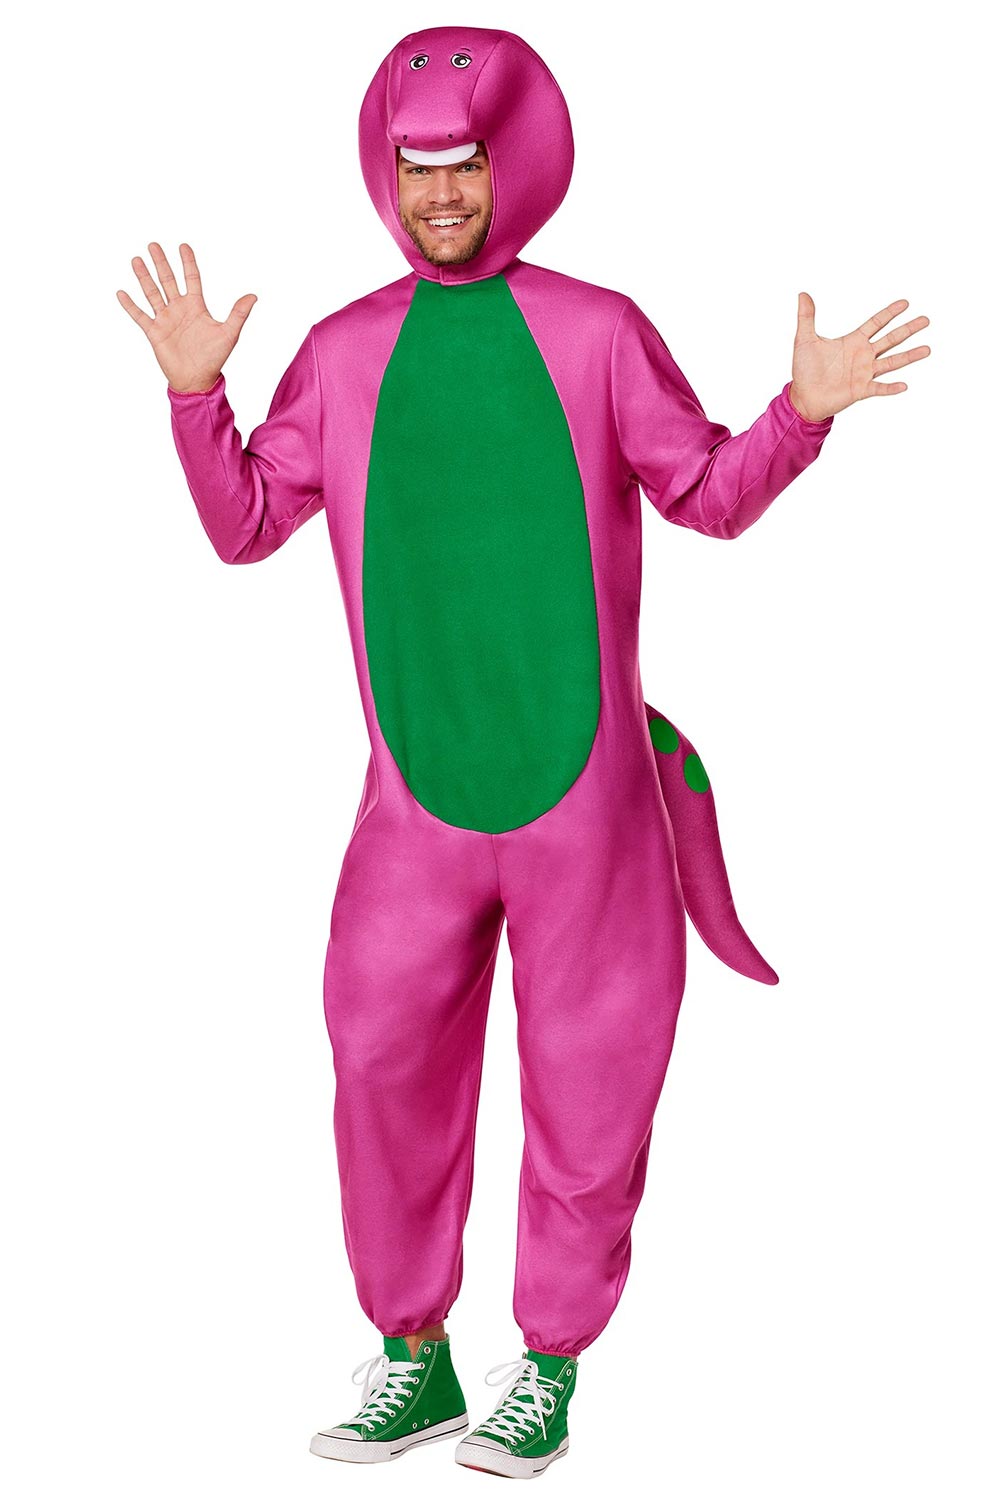 Adult Barney Mens Halloween Costume size Medium - image 1 of 2